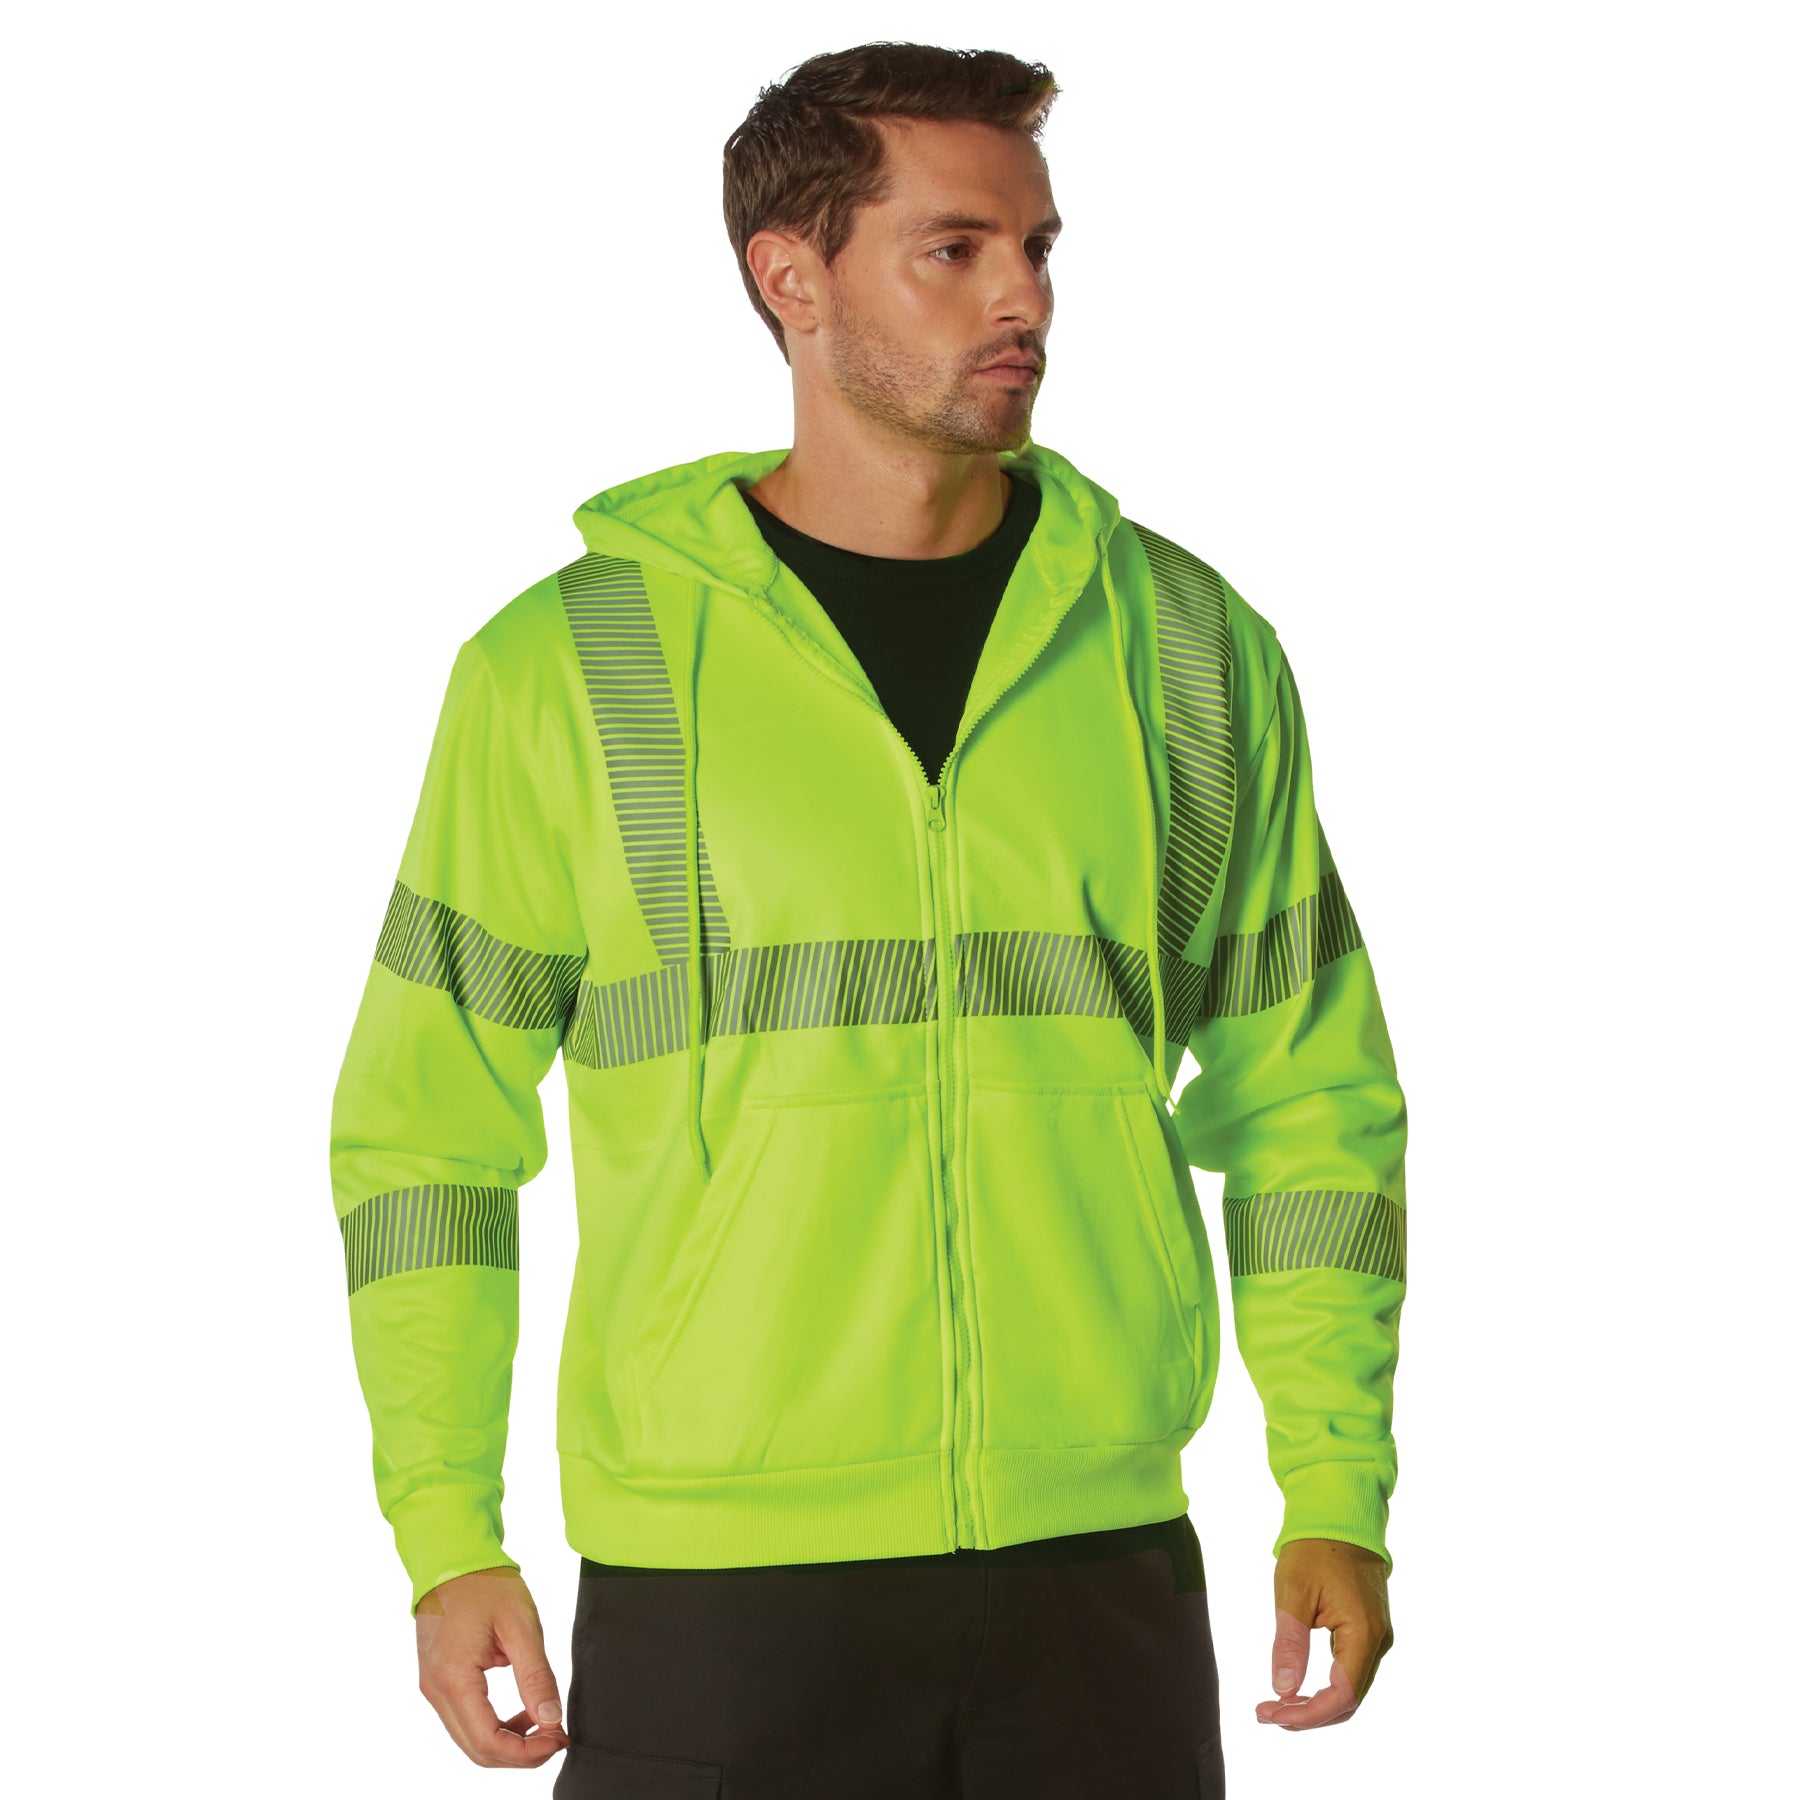 [Public Safety] Poly Security HI-Visibility Performance Zipper Sweatshirts